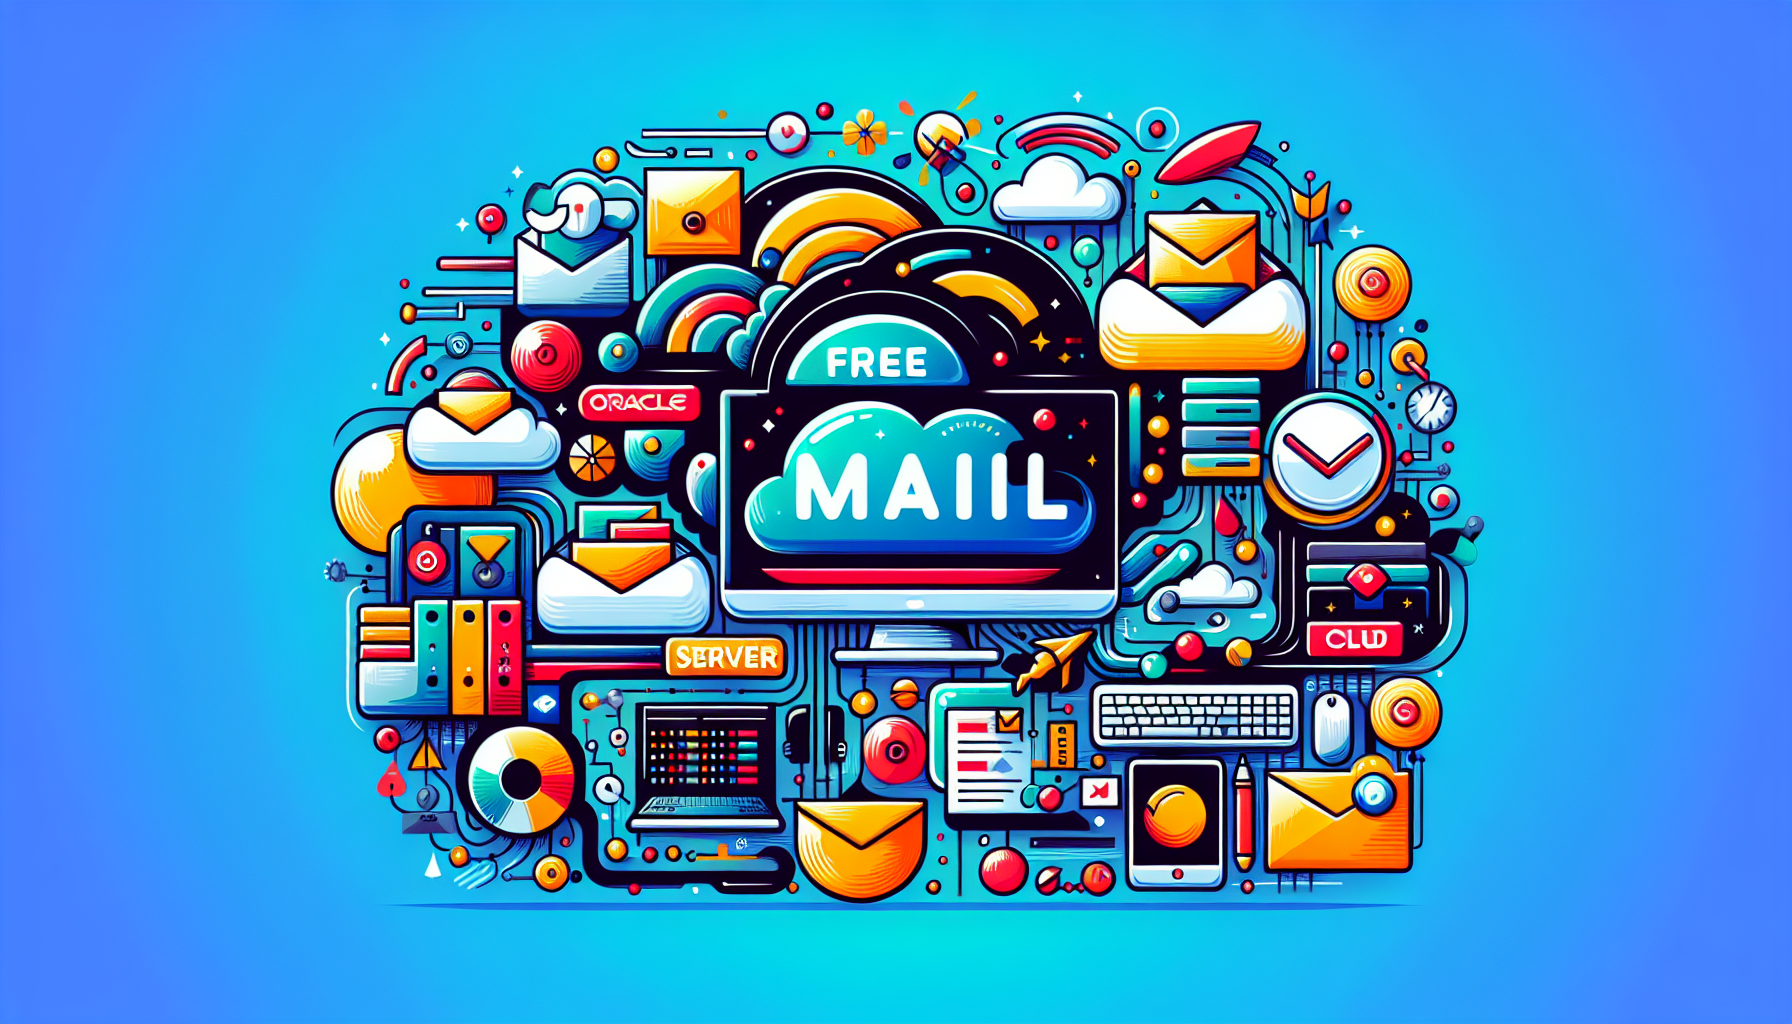 Free Mail Server on OCI